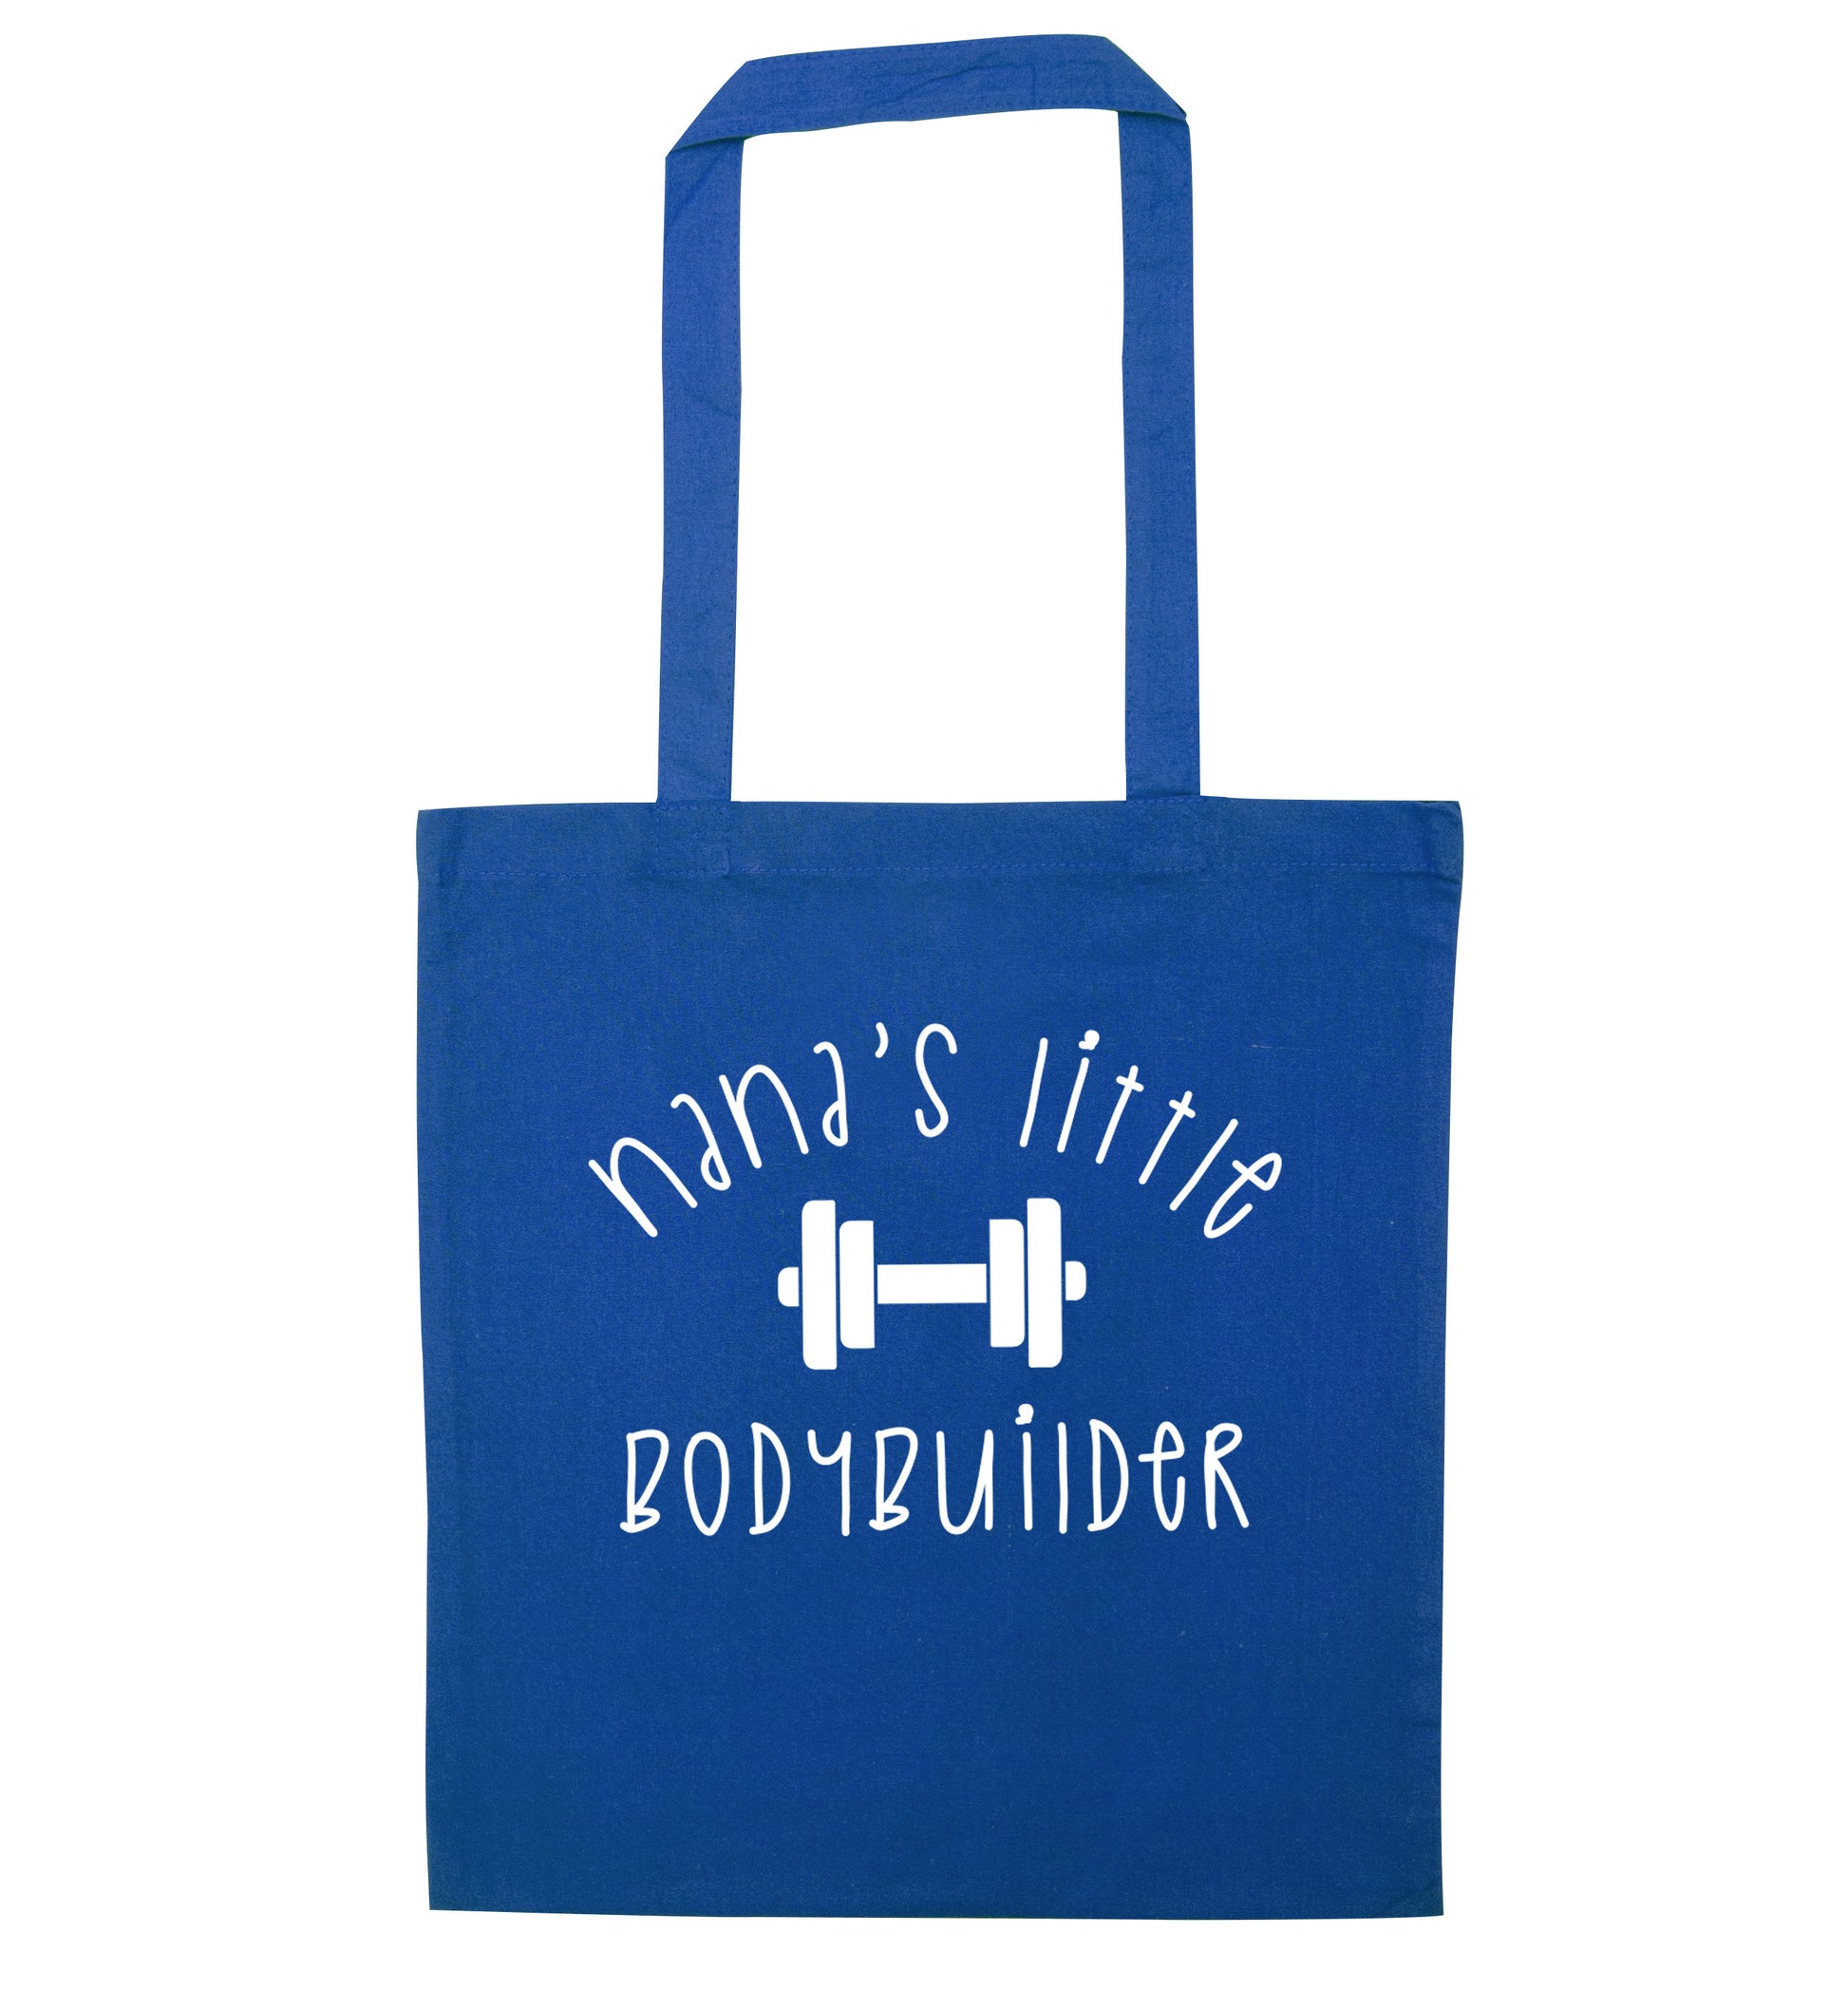 Nana's little bodybuilder blue tote bag